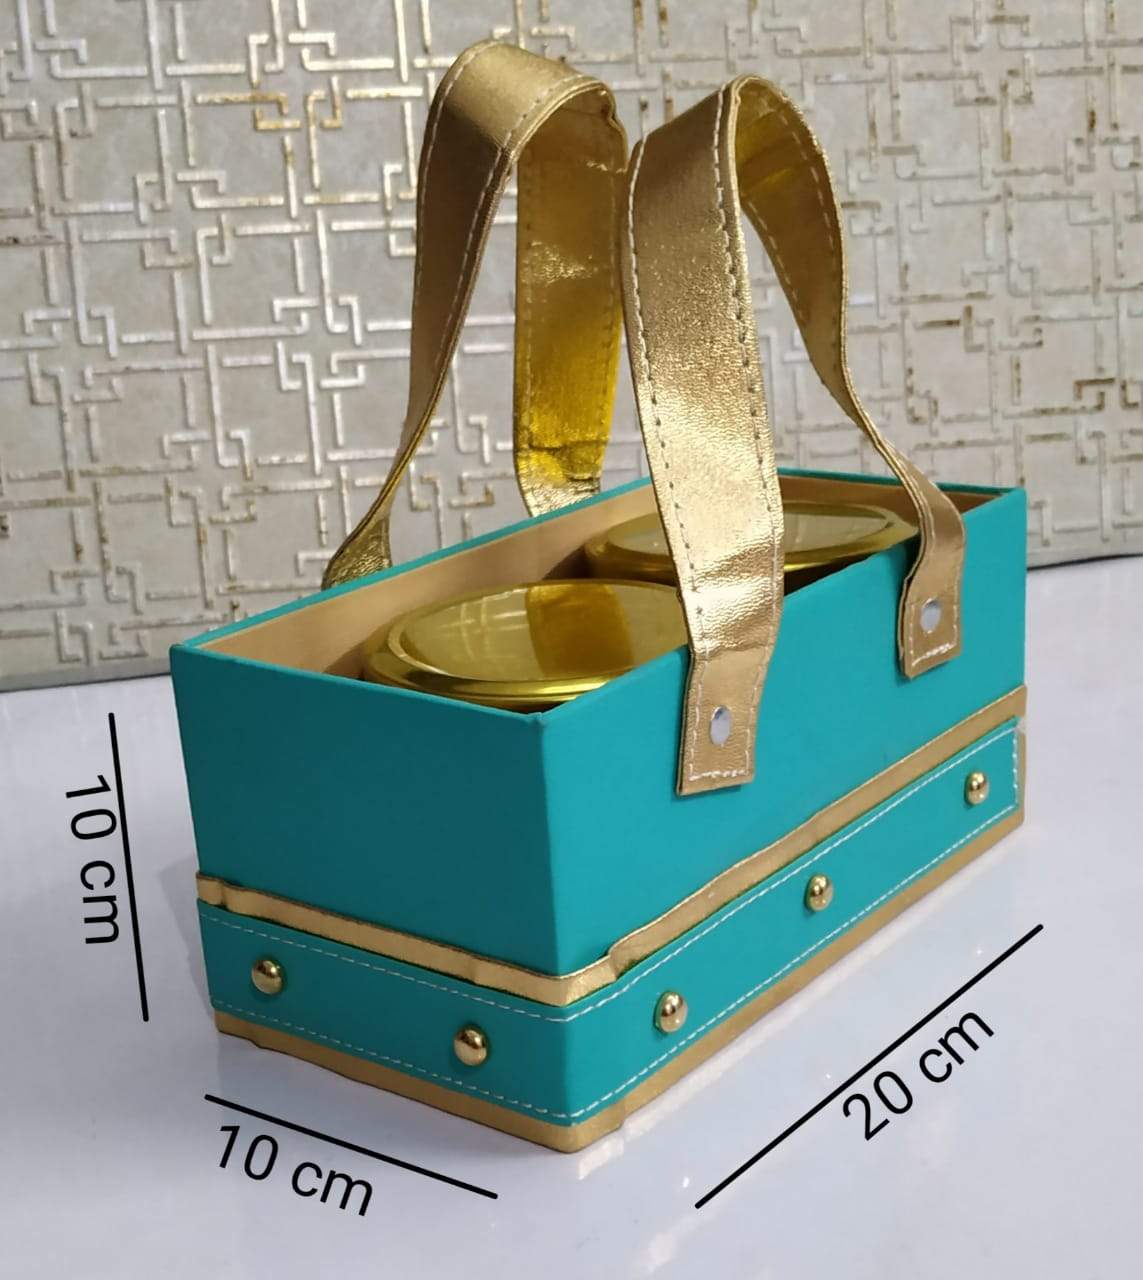 Wood Wedding Return Gift Ideas at Rs 255/piece in Rajkot | ID: 25522910862